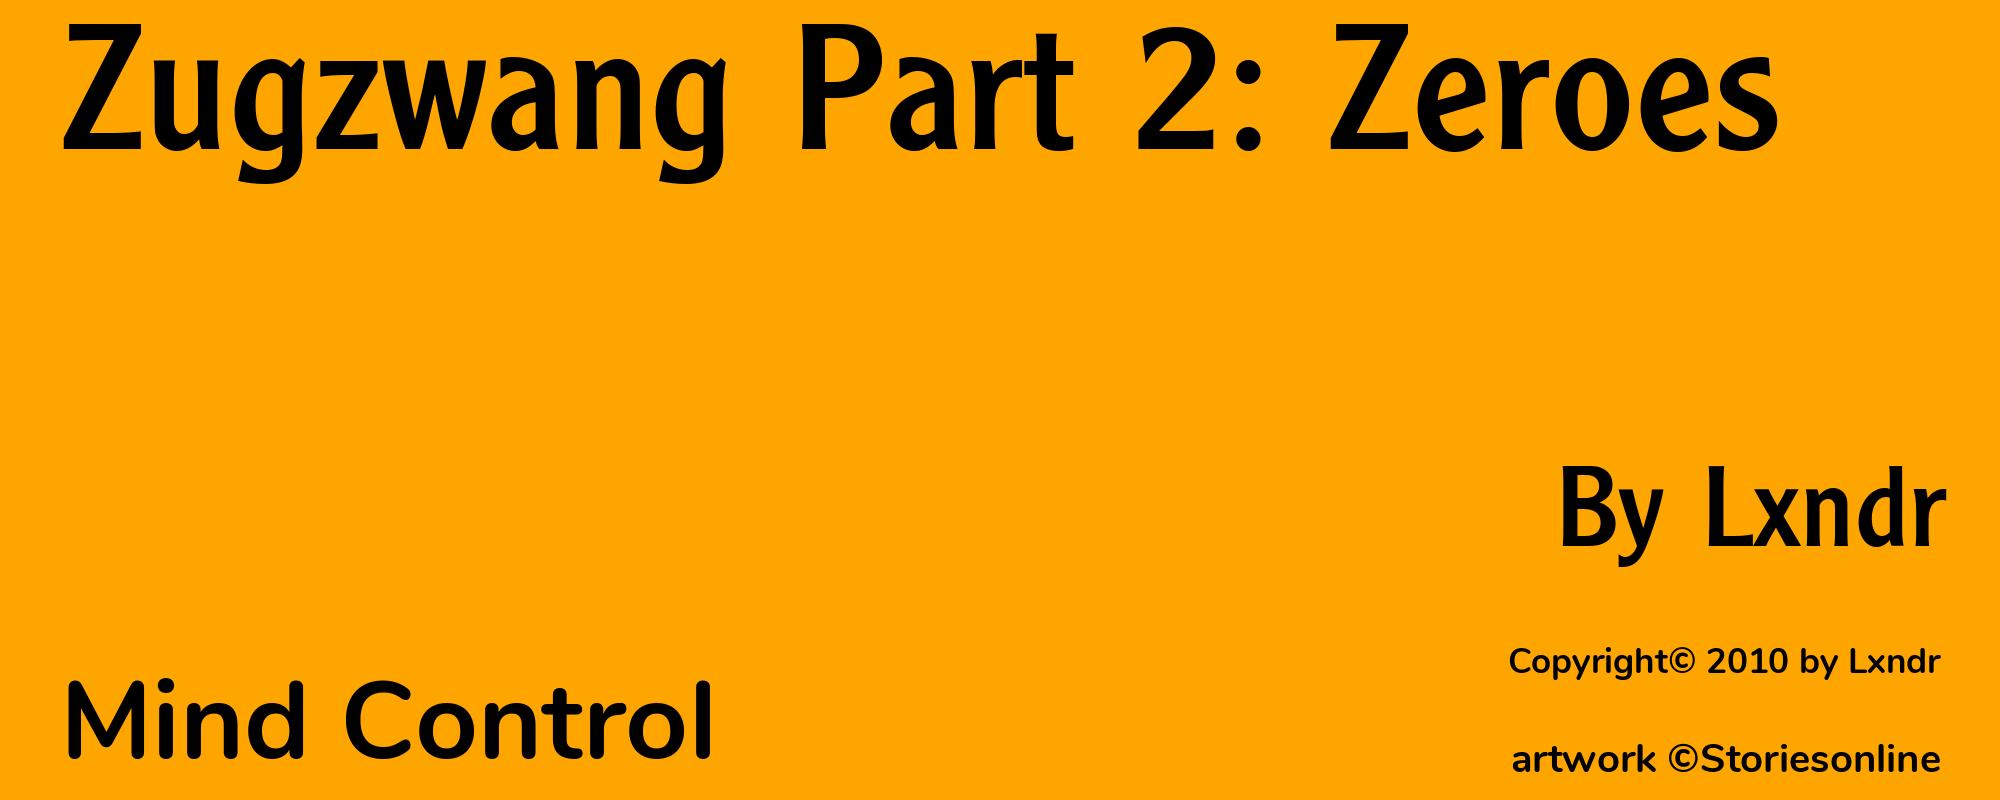 Zugzwang Part 2: Zeroes - Cover